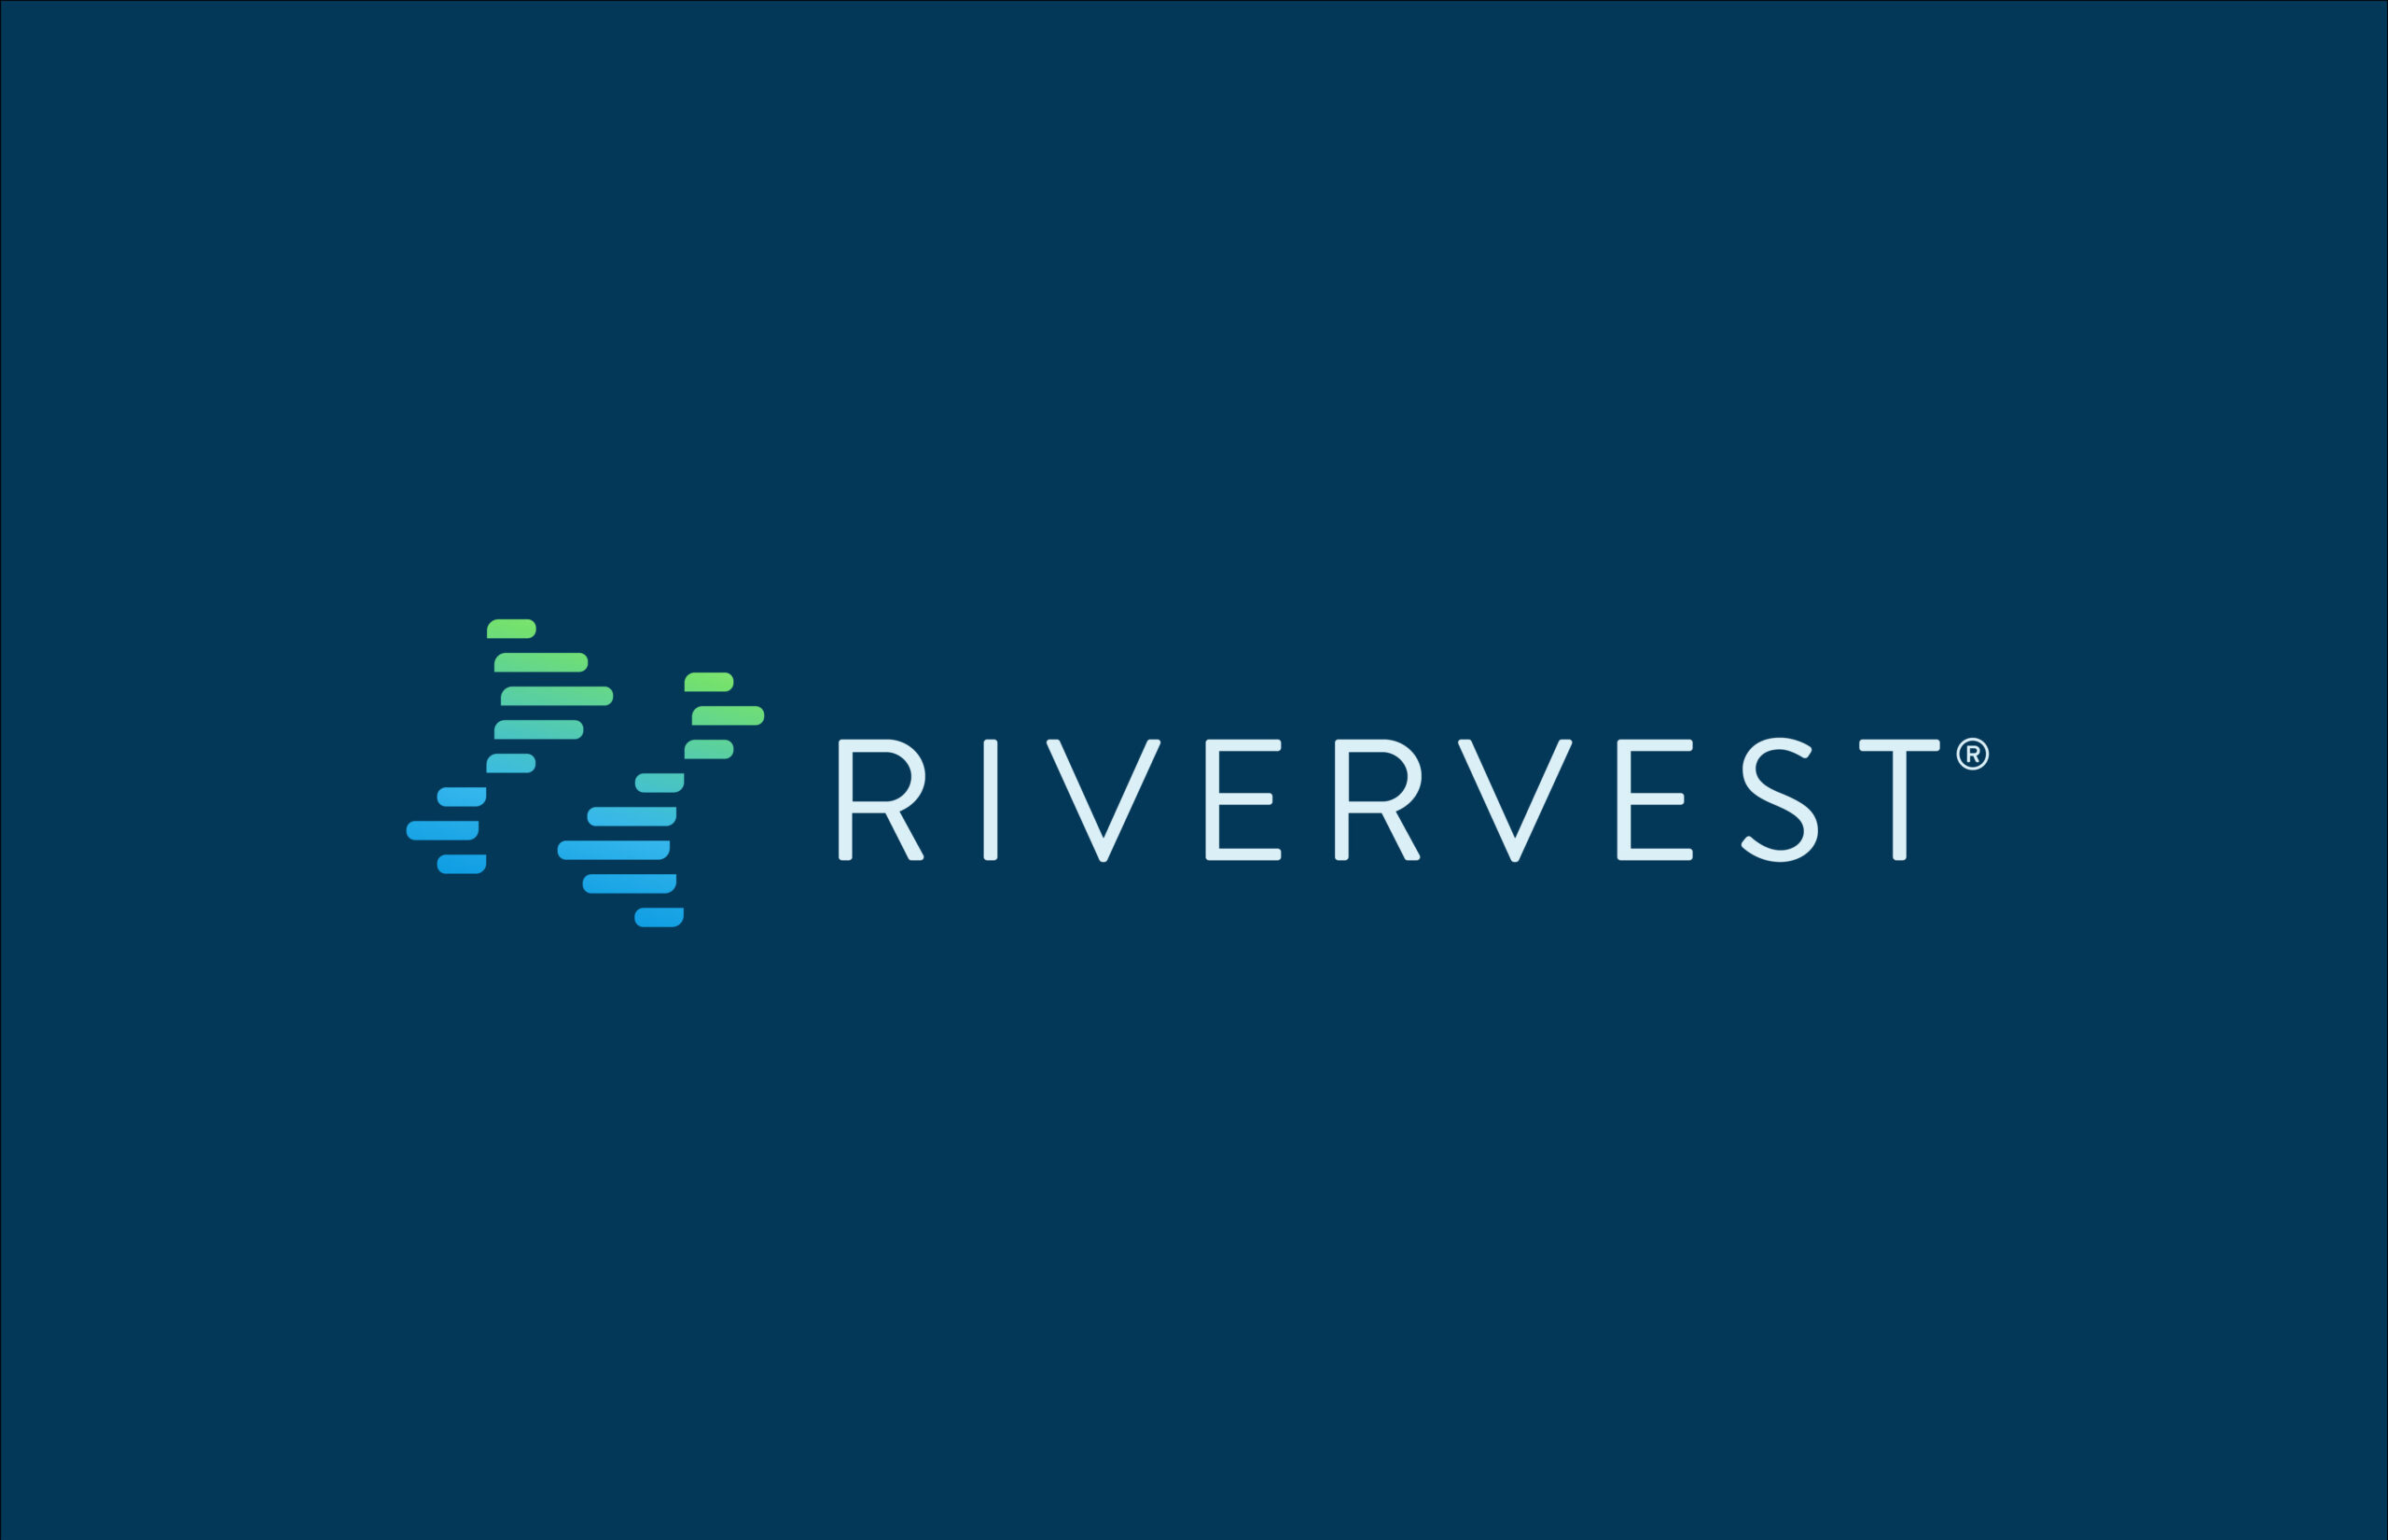 RiverVest